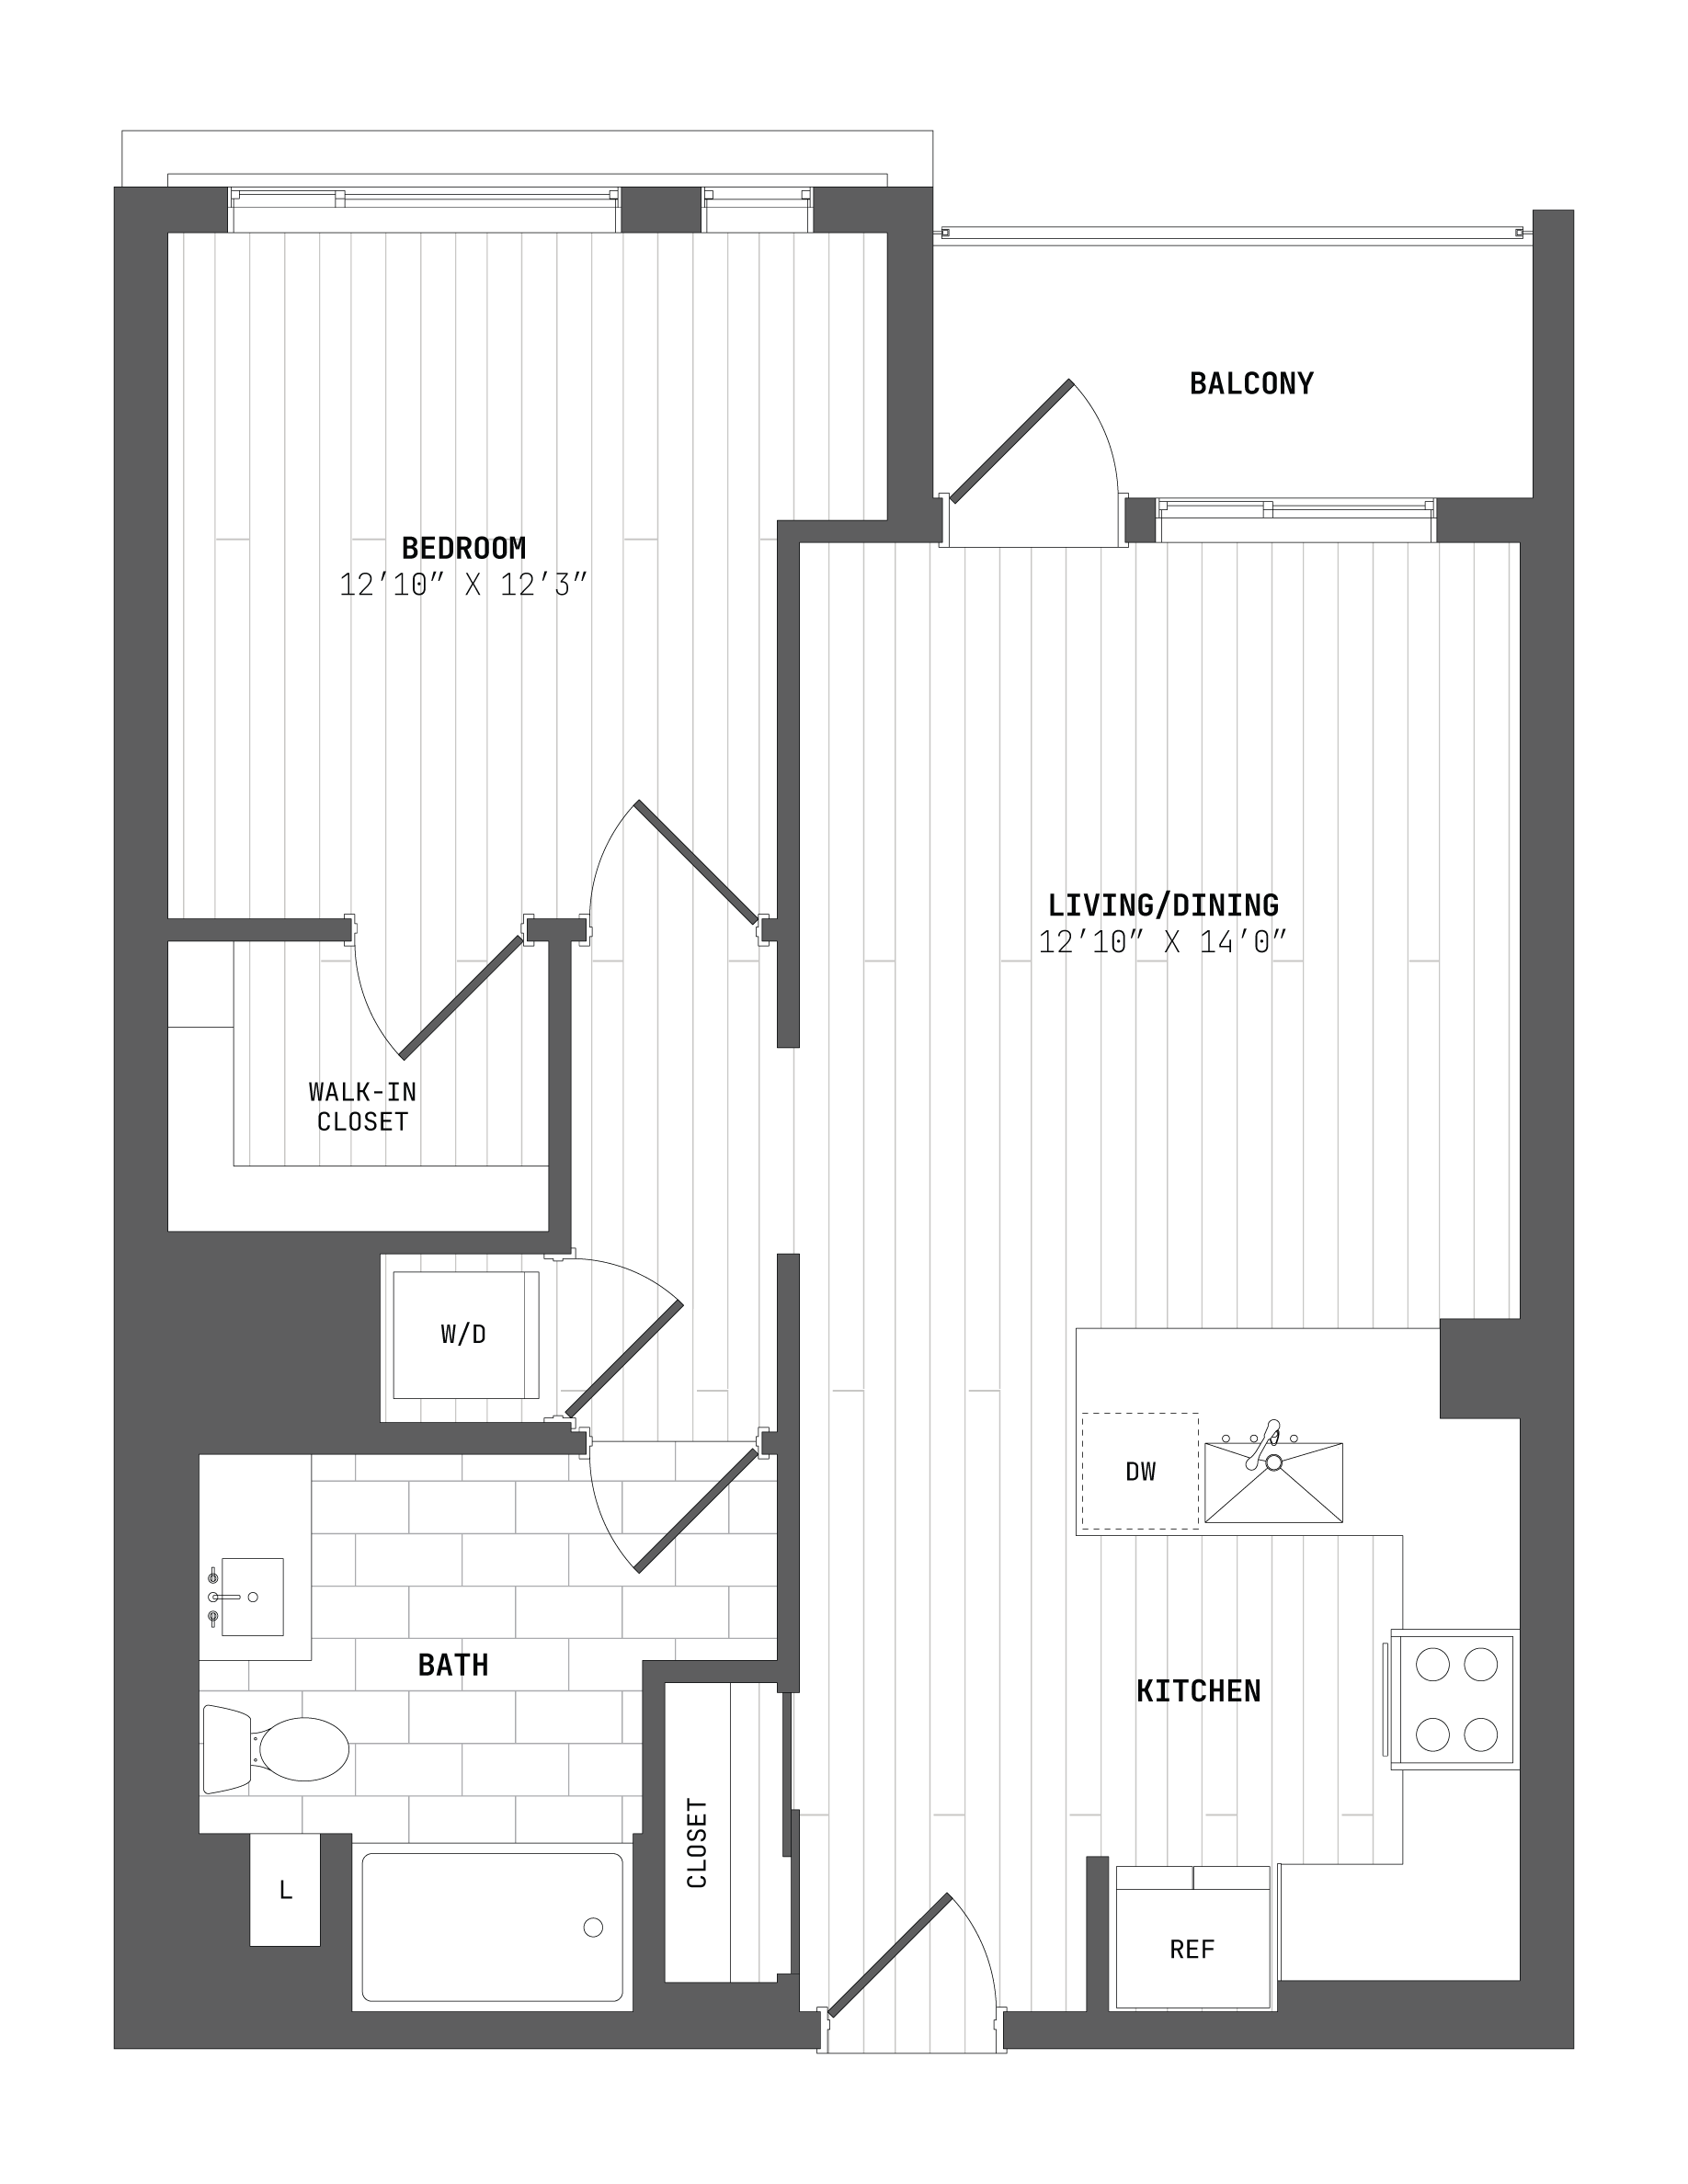 Apartment 4785276 floorplan